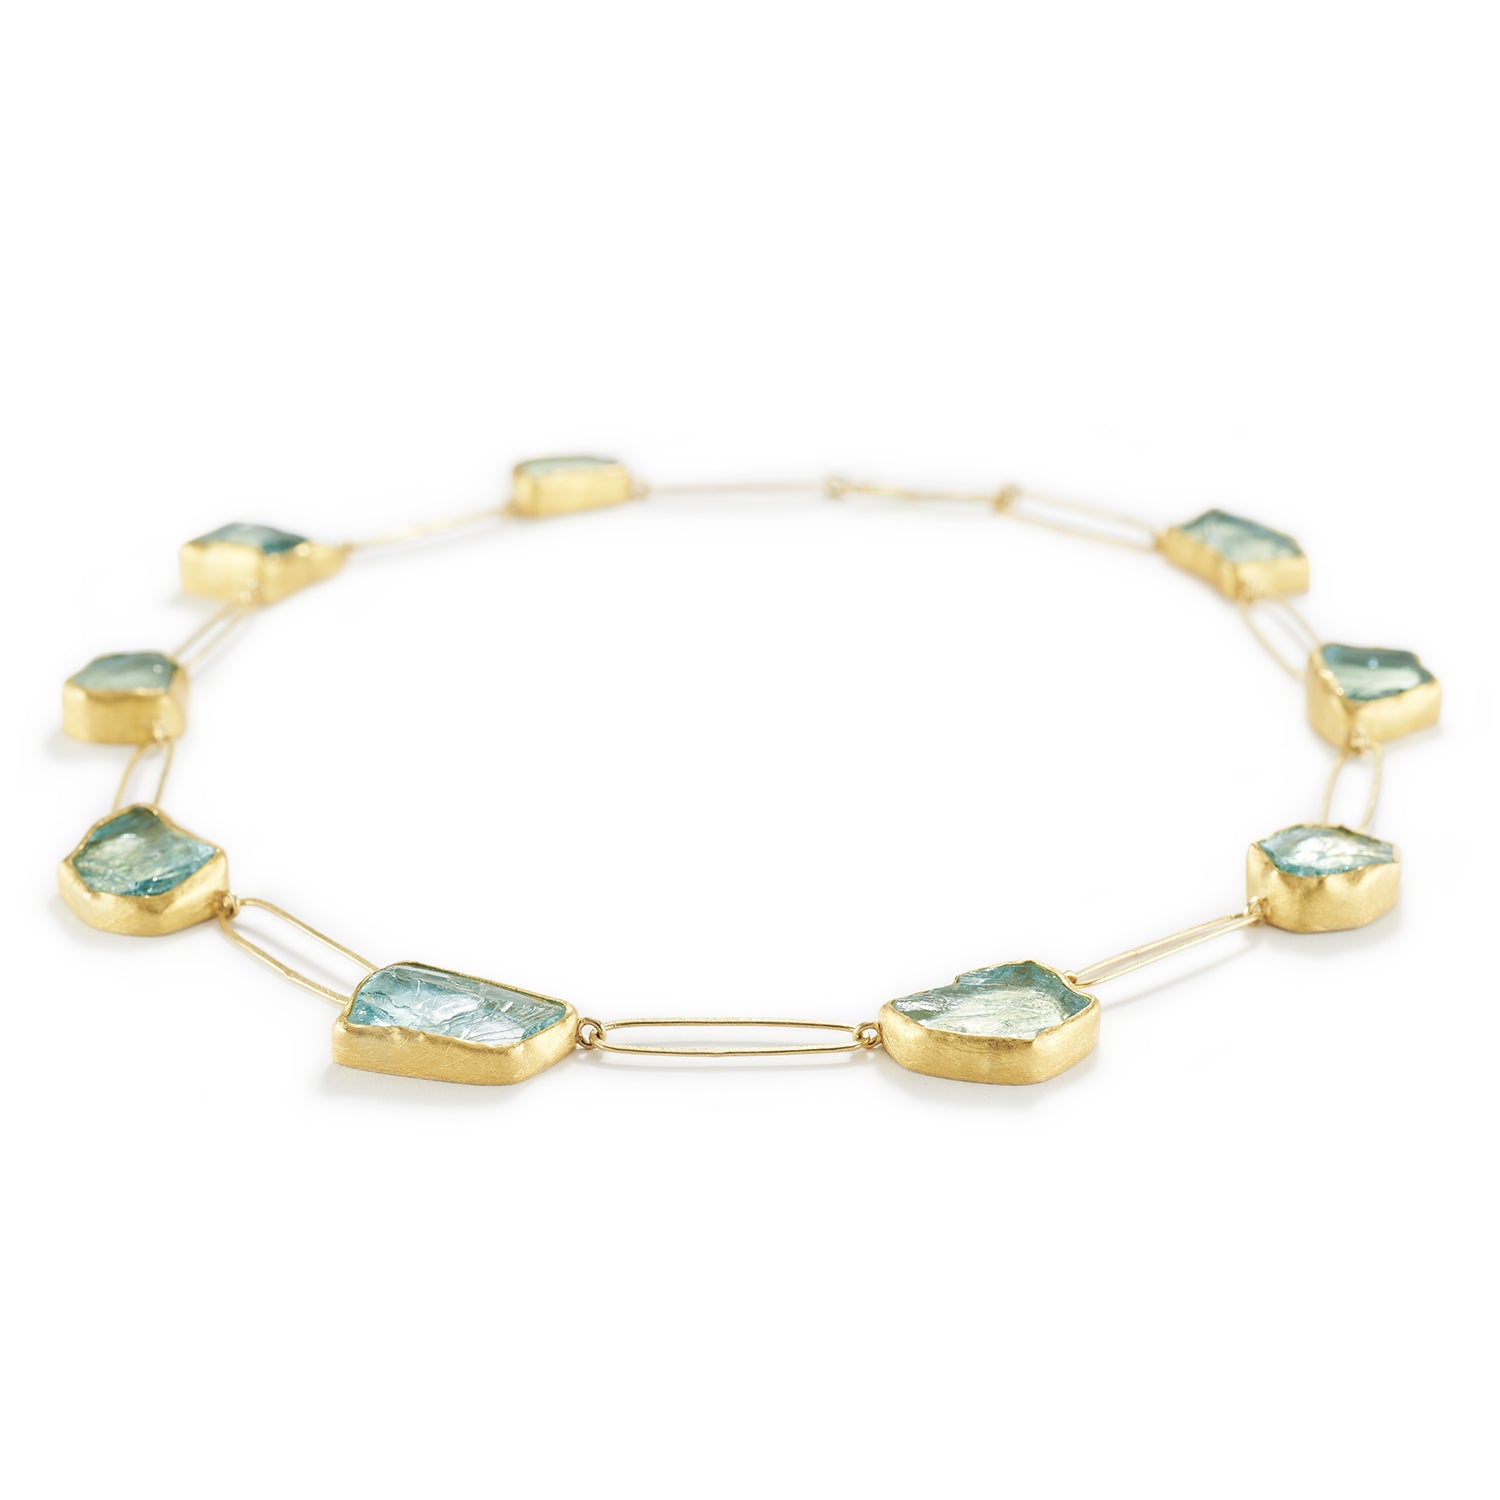 Aqua Crystal Necklace